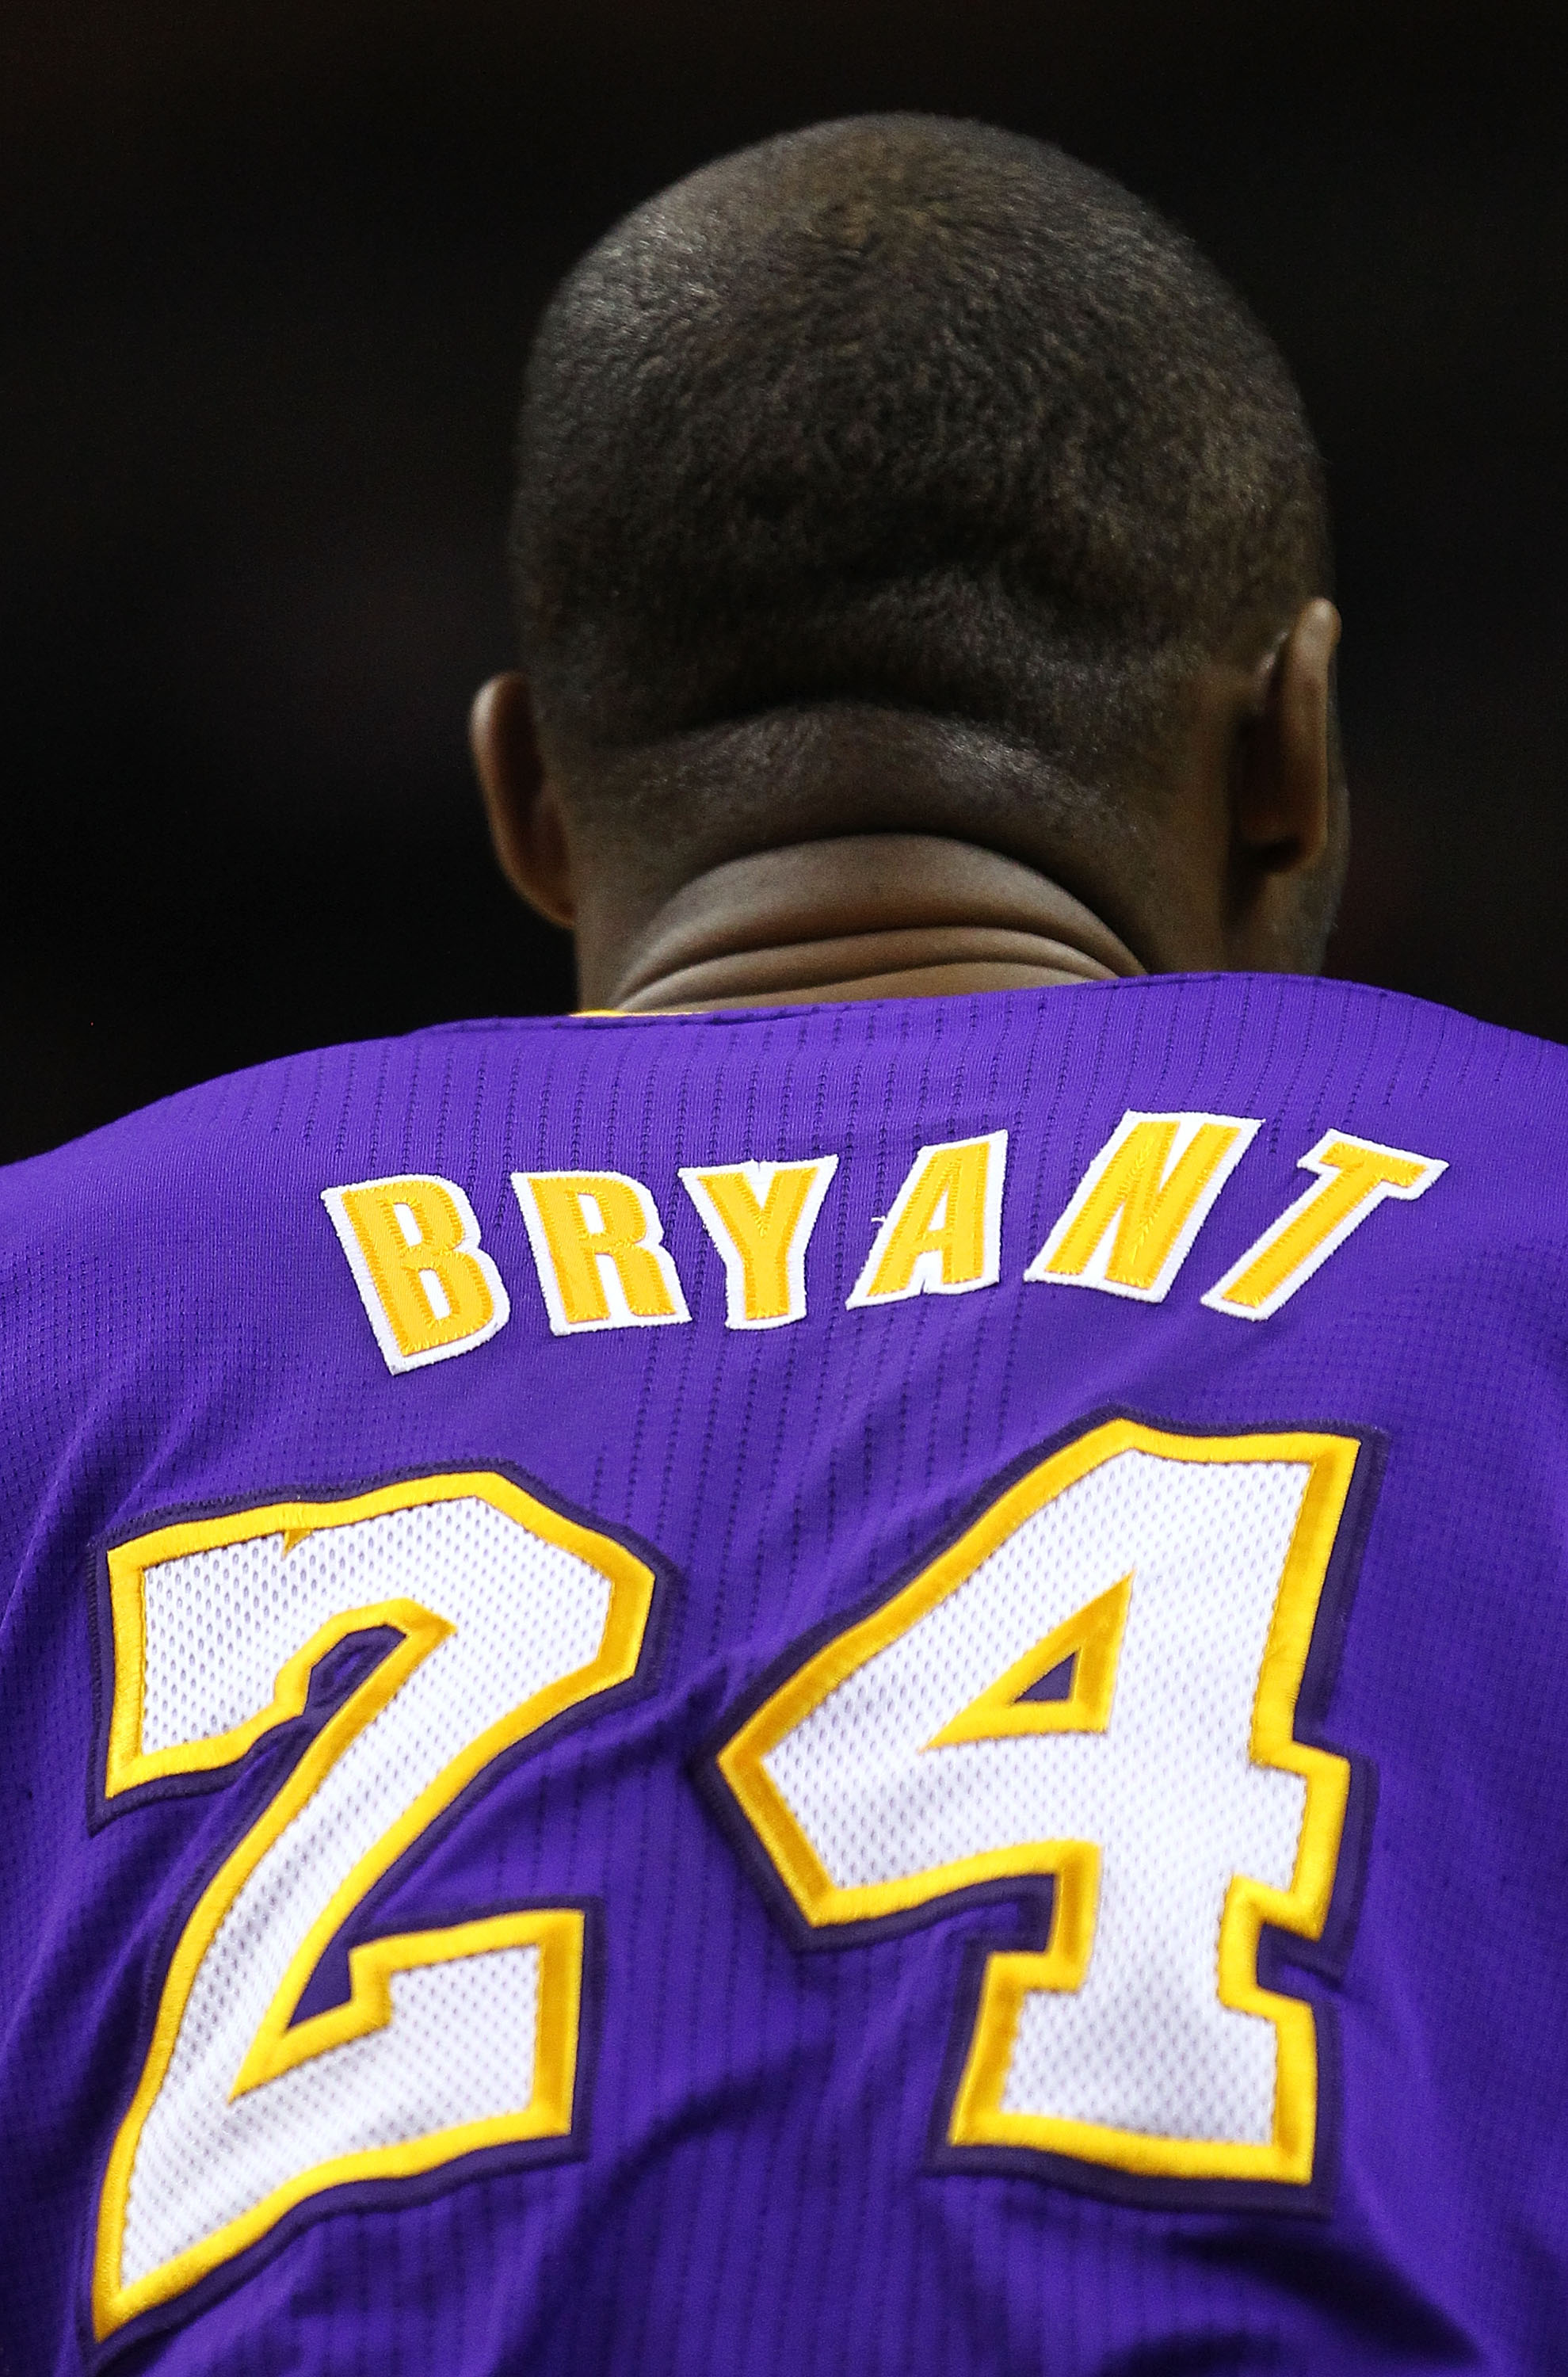 Kobe Bryant Jerseys for sale in San Antonio, Texas